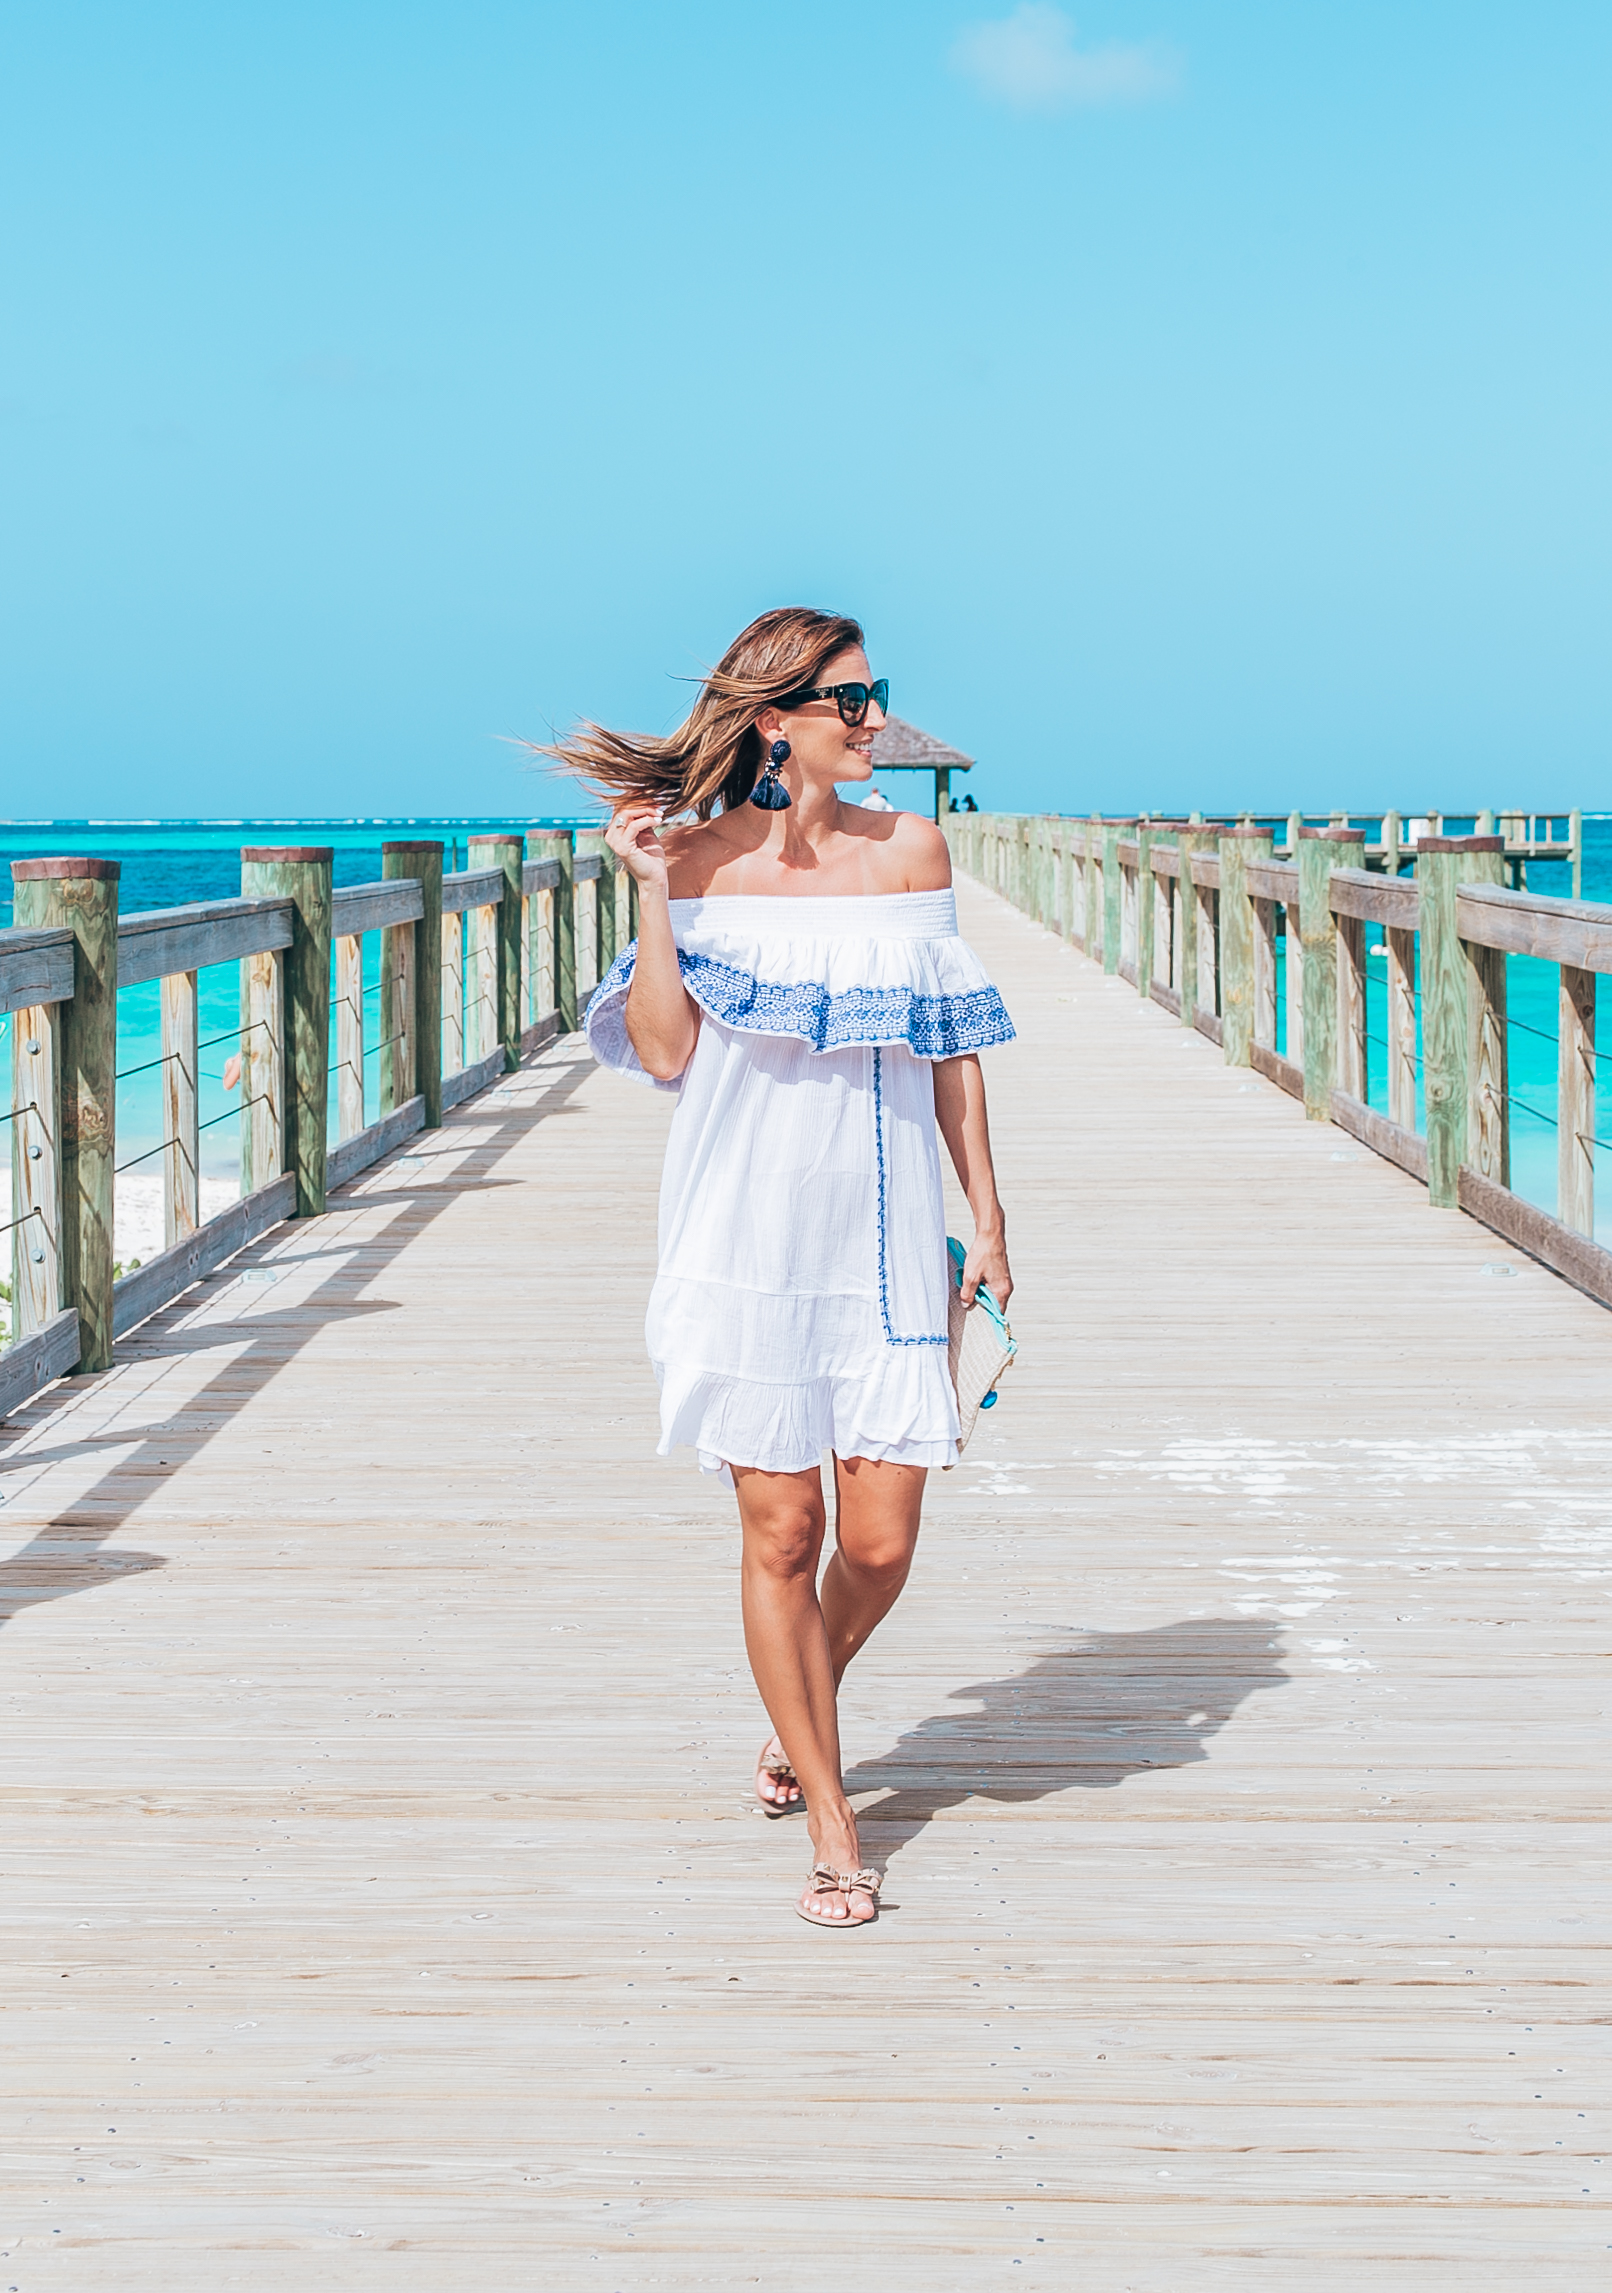 Perfect white and blue off the shoulder dress with valentino rockstud flip flops and Aloha pom pom bag; baha mar resort Bahamas; mandy furnis sparkleshinylove